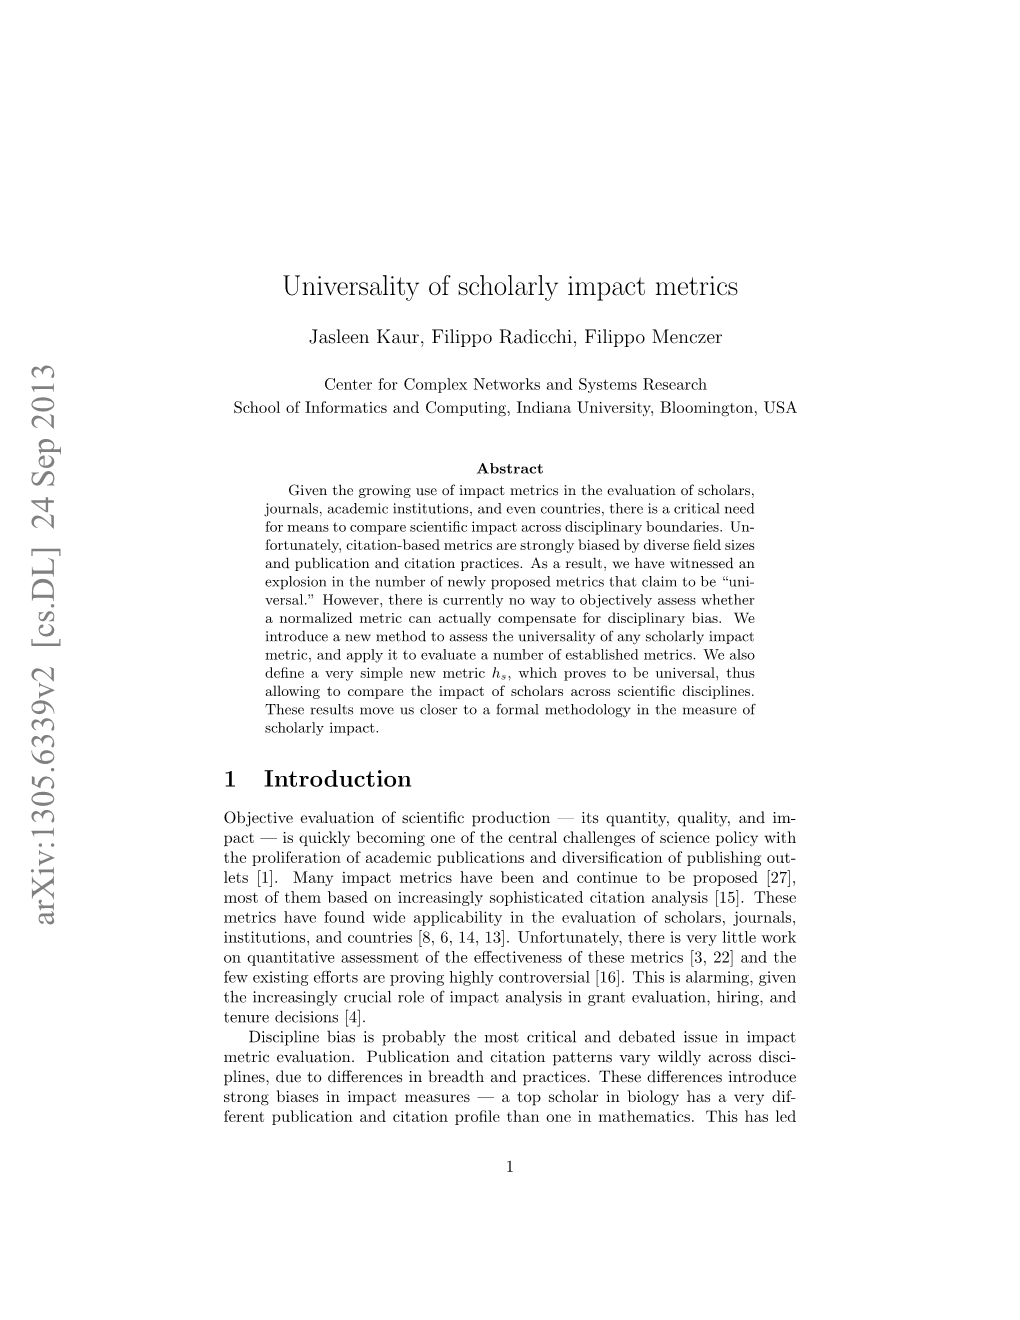 Universality of Scholarly Impact Metrics